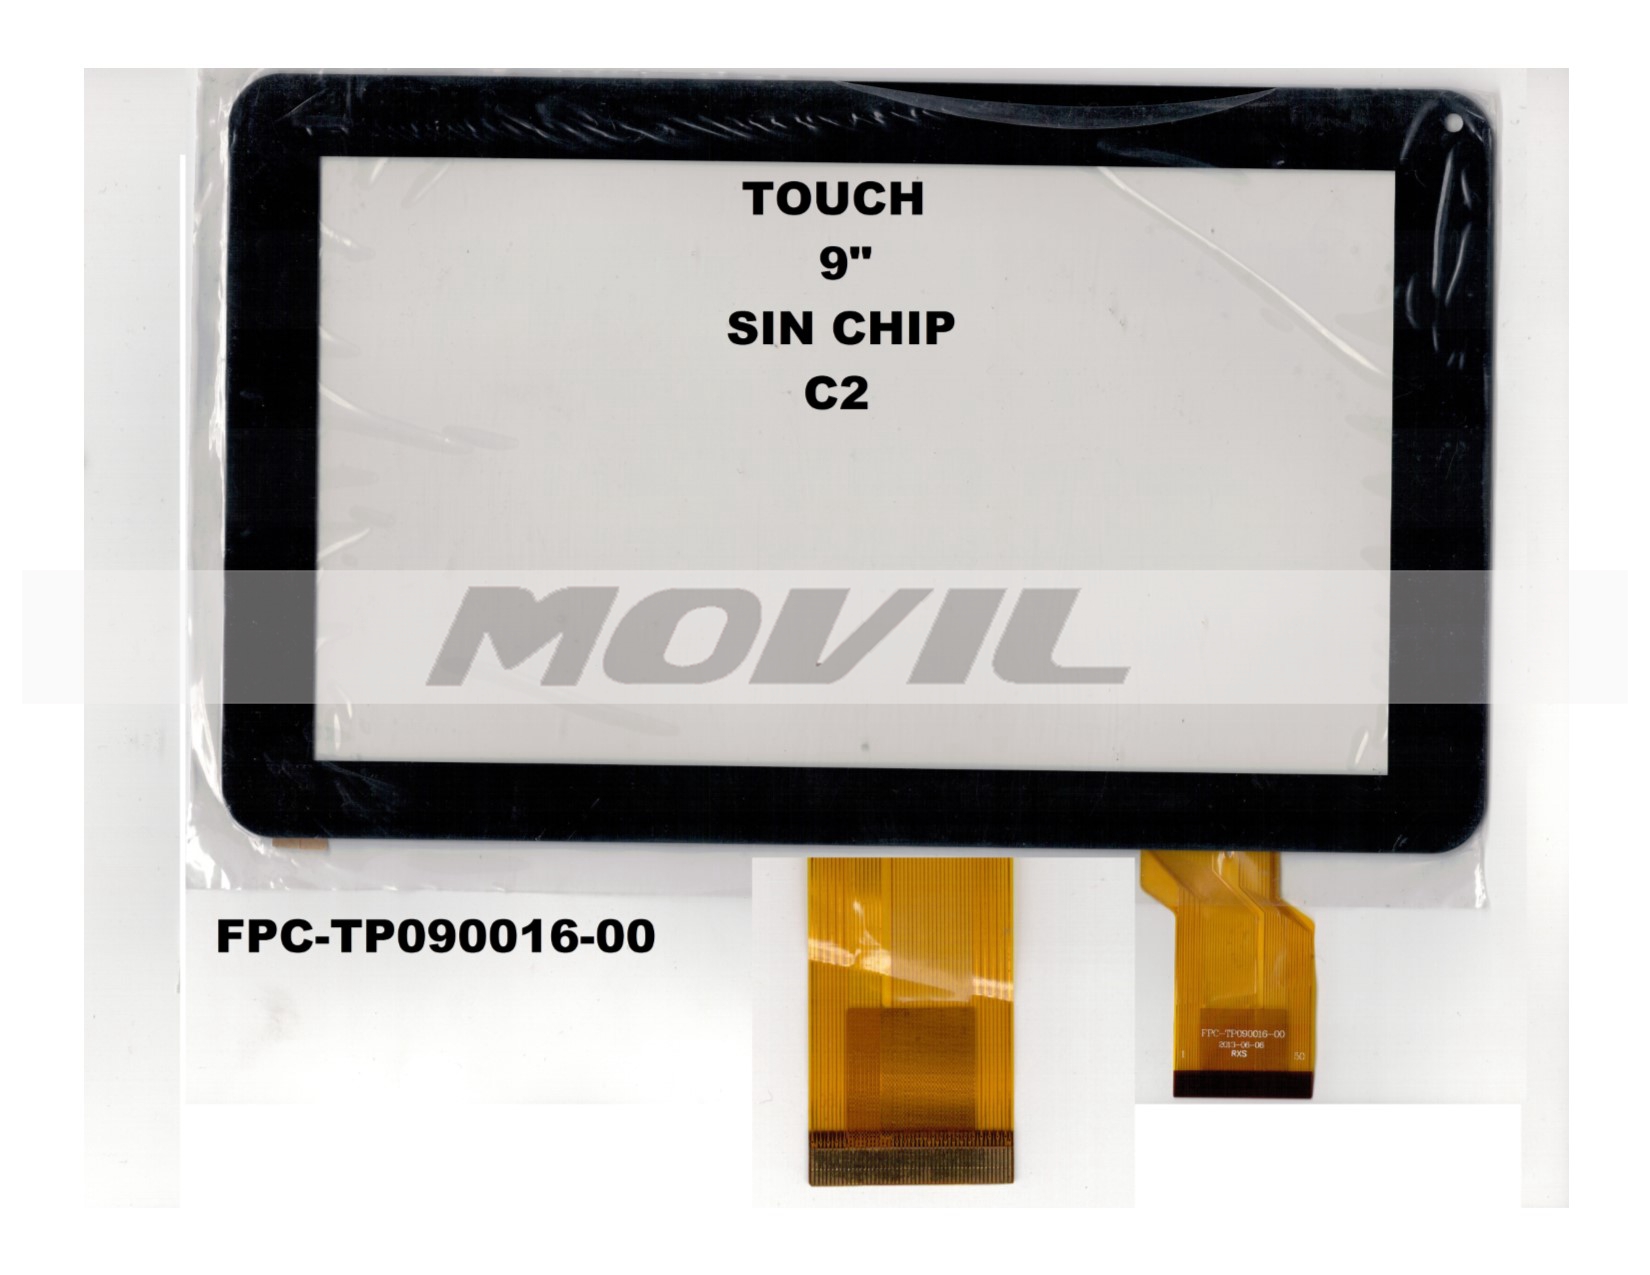 Touch tactil para tablet flex 9 inch SIN CHIP C2 FPC-TP090016-00